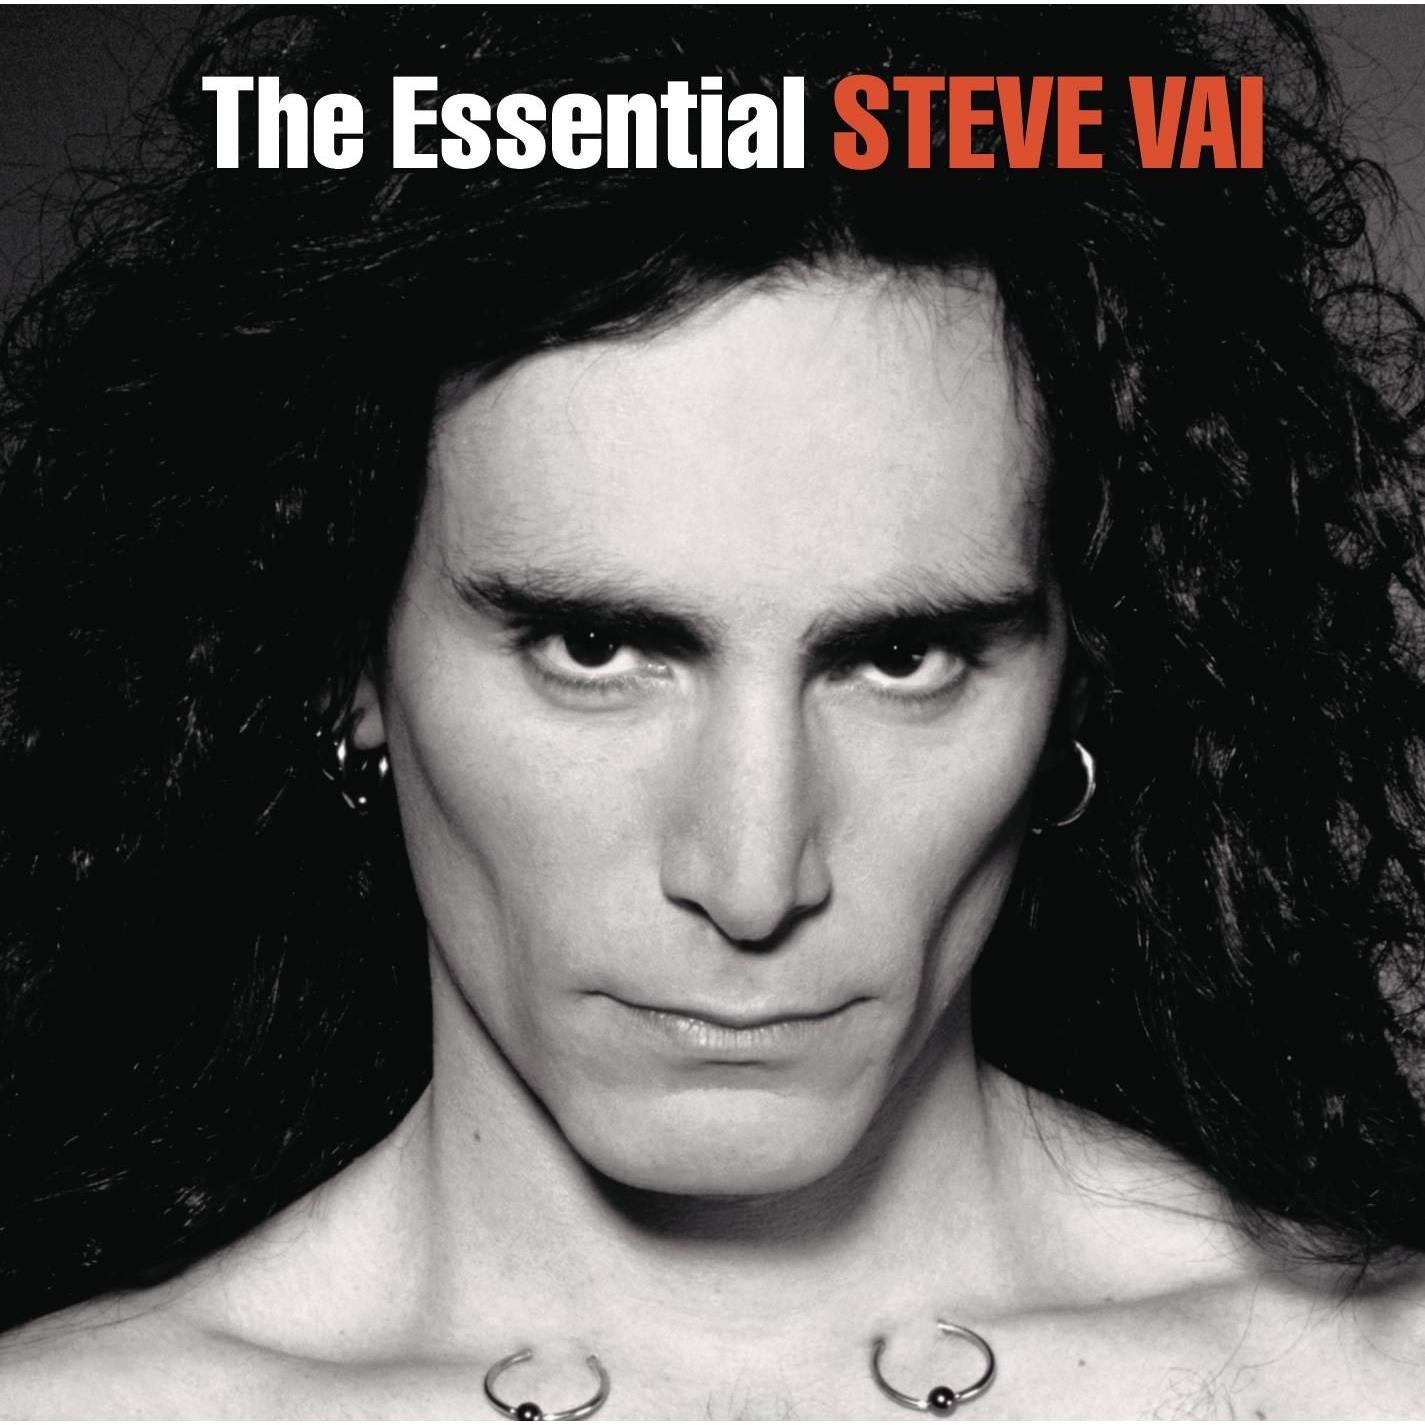 essential steve vai, the (gold series)